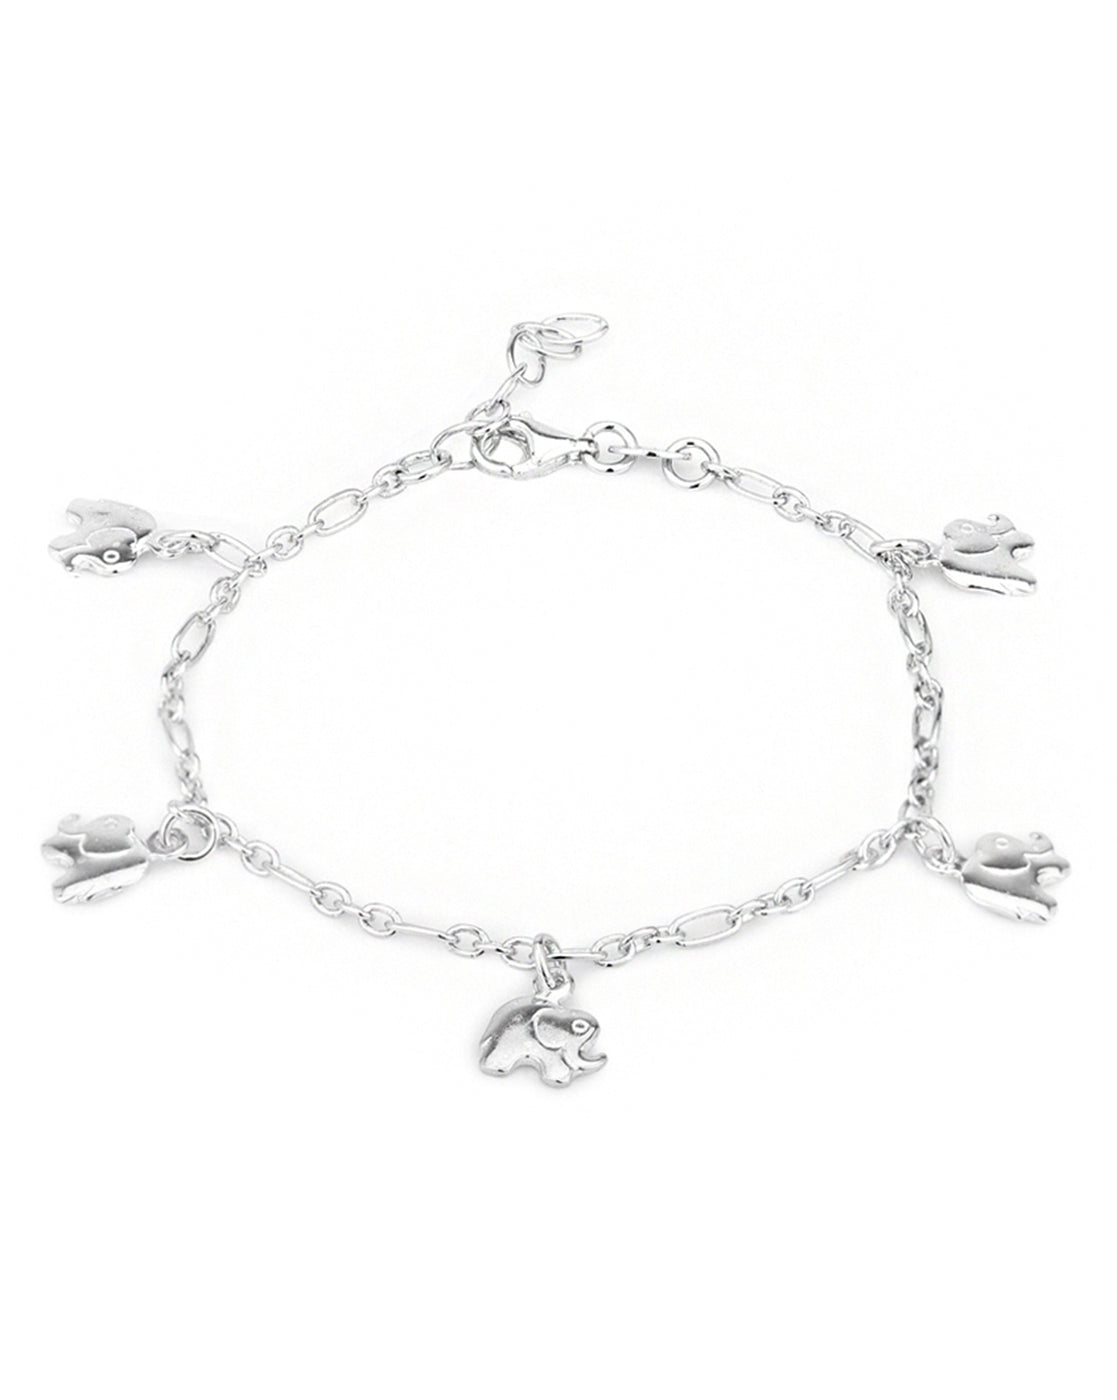 Sterling silver charm bracelet, 'The Garden in my Heart' | Sterling silver  charm bracelet, Silver charm bracelet, Silver link bracelet